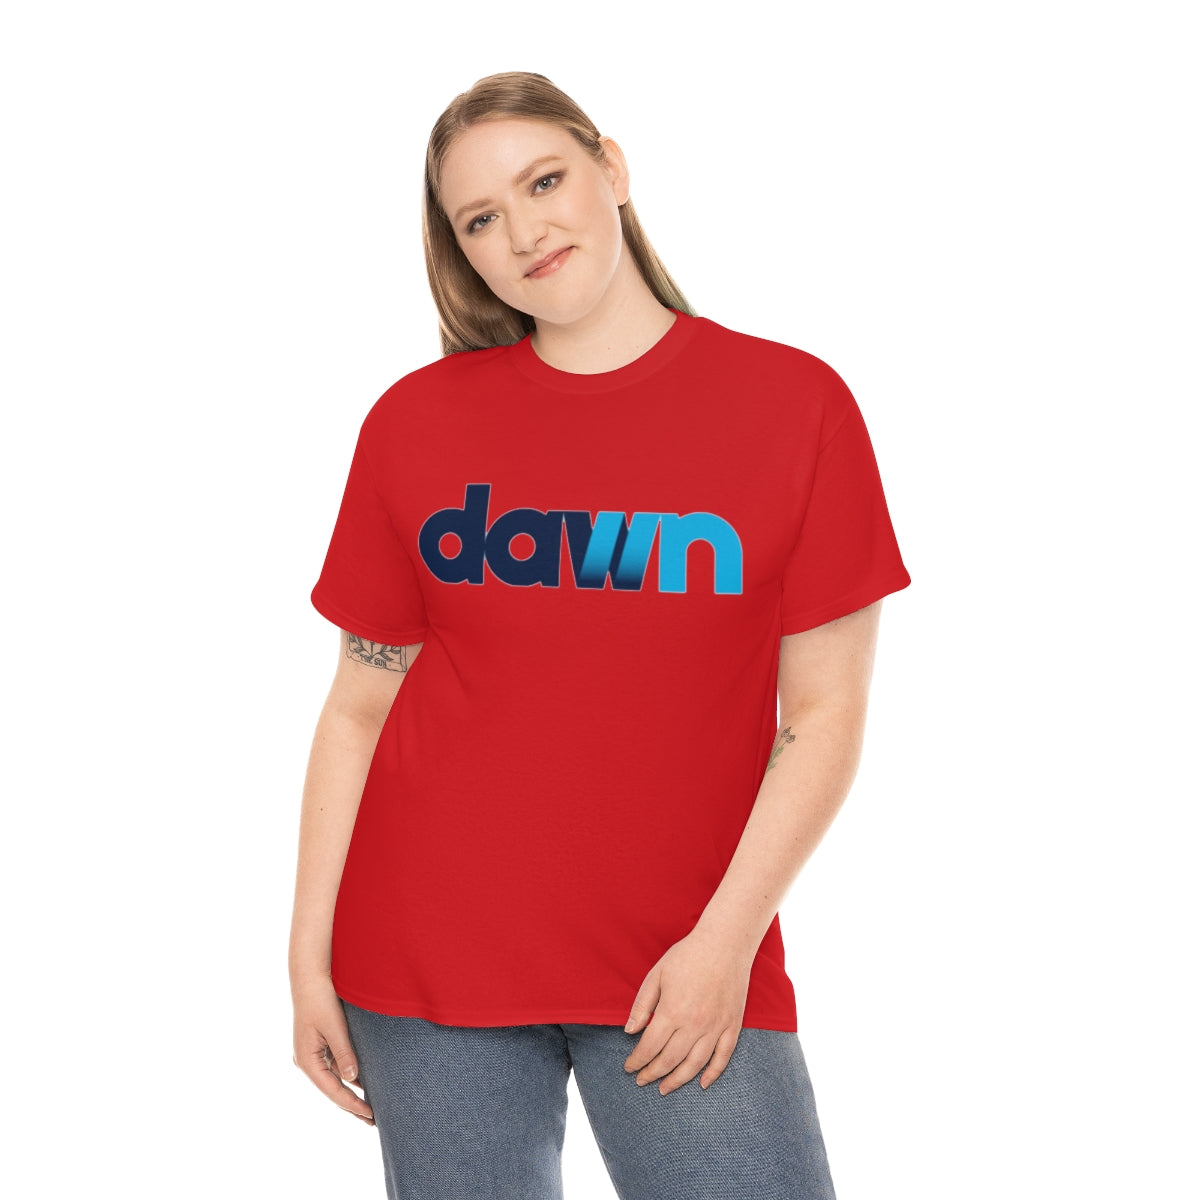 DAWN - Deaf Abused Women's Network - Unisex Heavy Cotton Tee